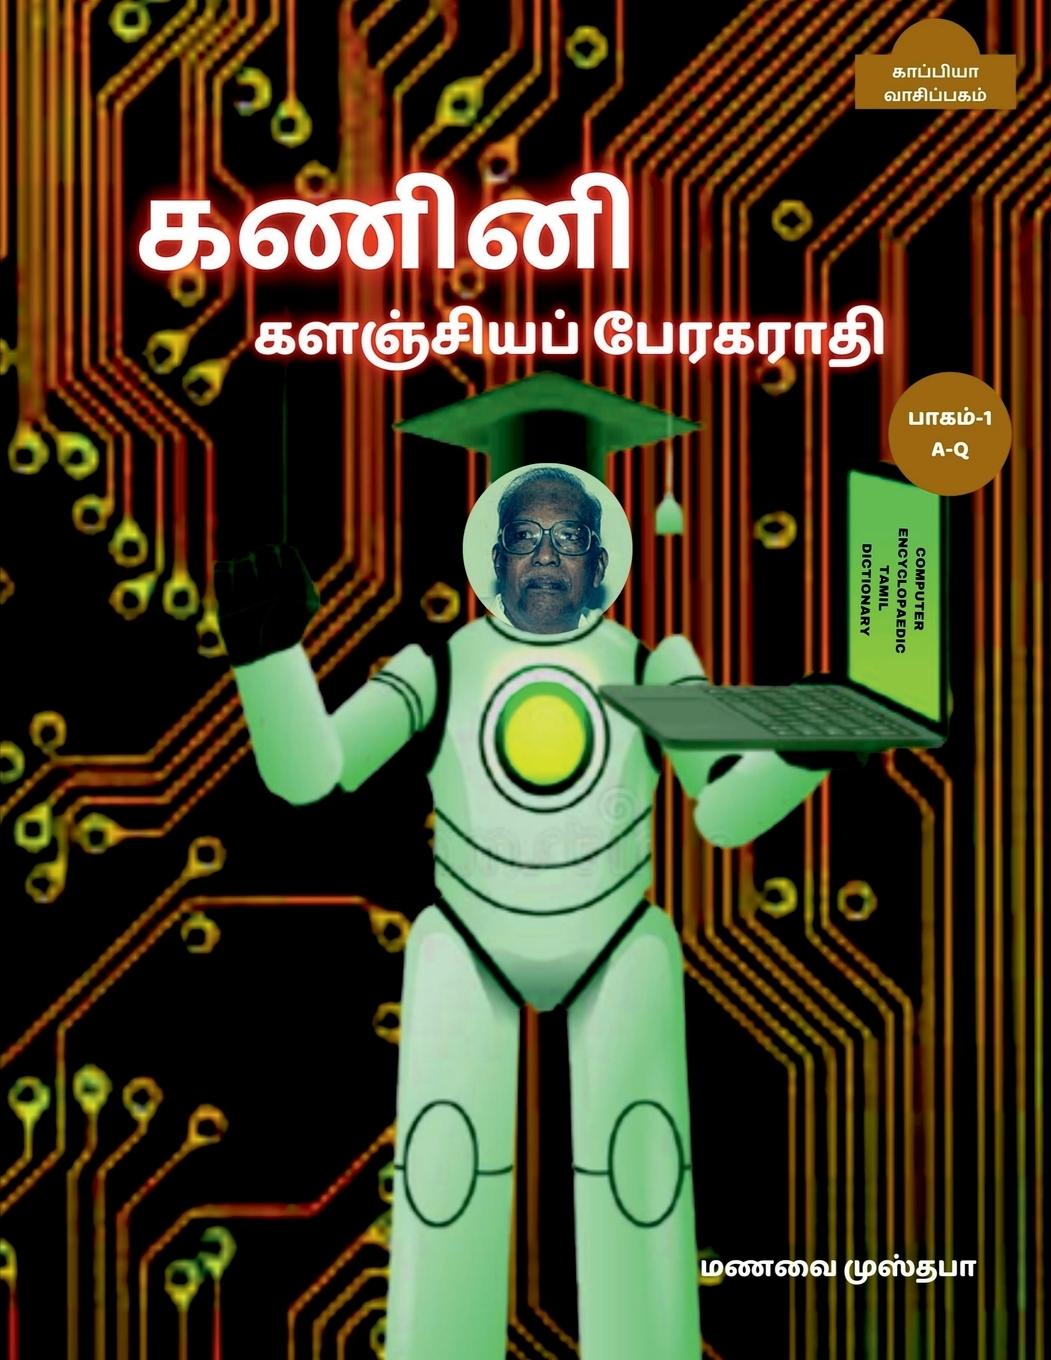 Book Computer Encyclopaedic Tamil Dictionary (A-Q) / &#2965;&#2979;&#3007;&#2985;&#3007; &#2965;&#2995;&#2974;&#3021;&#2970;&#3007;&#2991;&#2986;&#3021; &# 